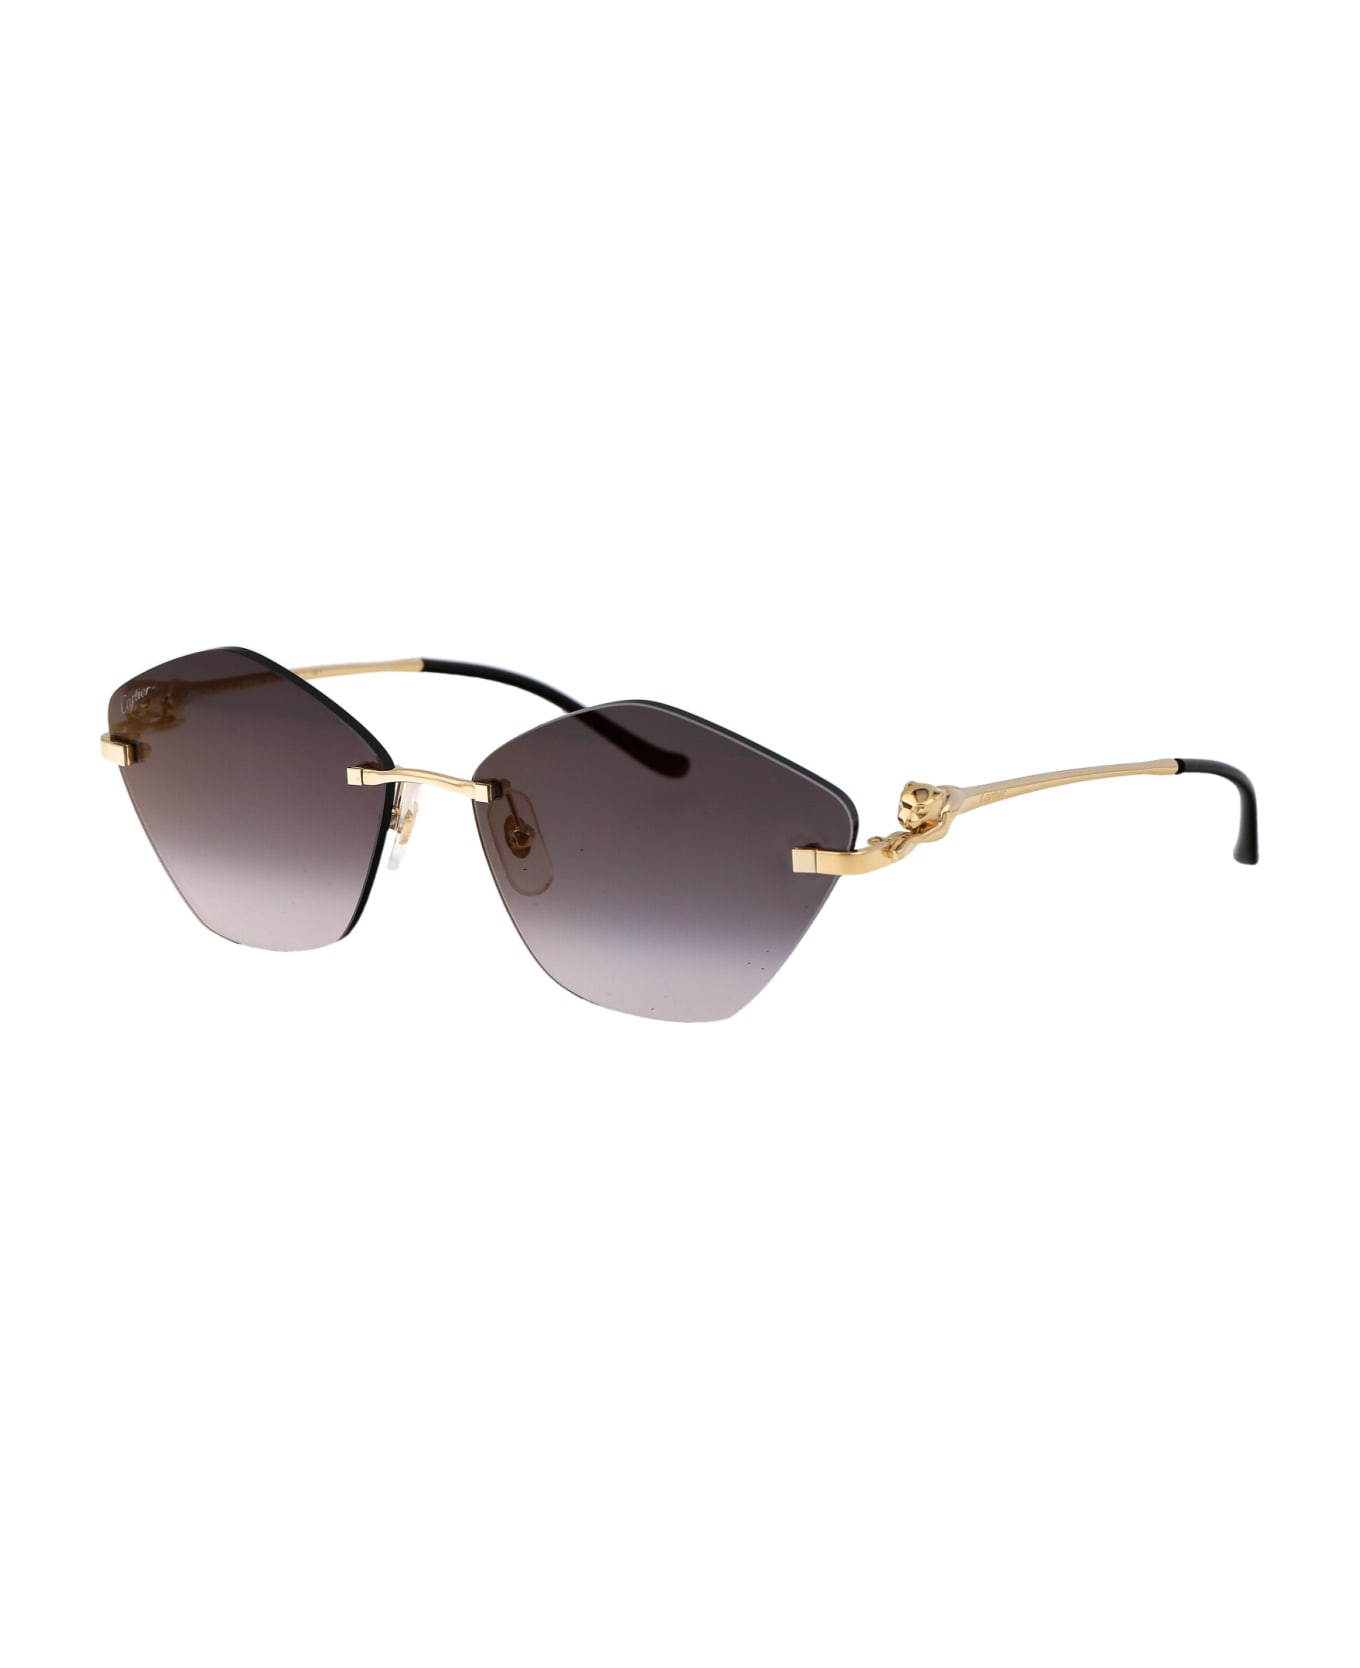 Cartier Eyewear Ct0429s Sunglasses - 001 GOLD GOLD GREY